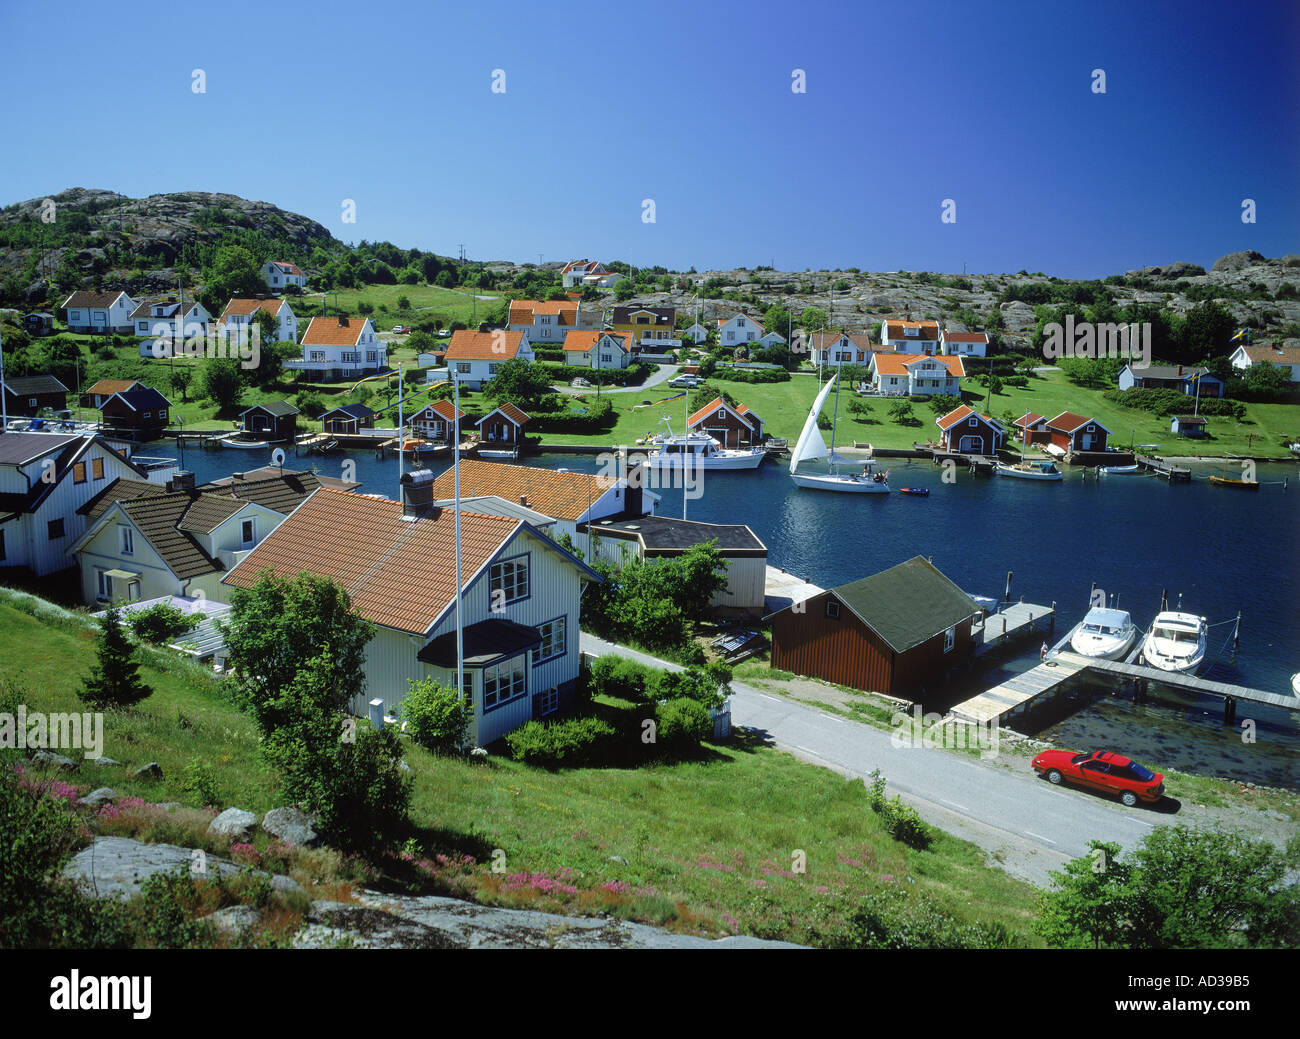 Village de Fjällbacka dans Bohuslän sur la côte ouest de la Suède Banque D'Images